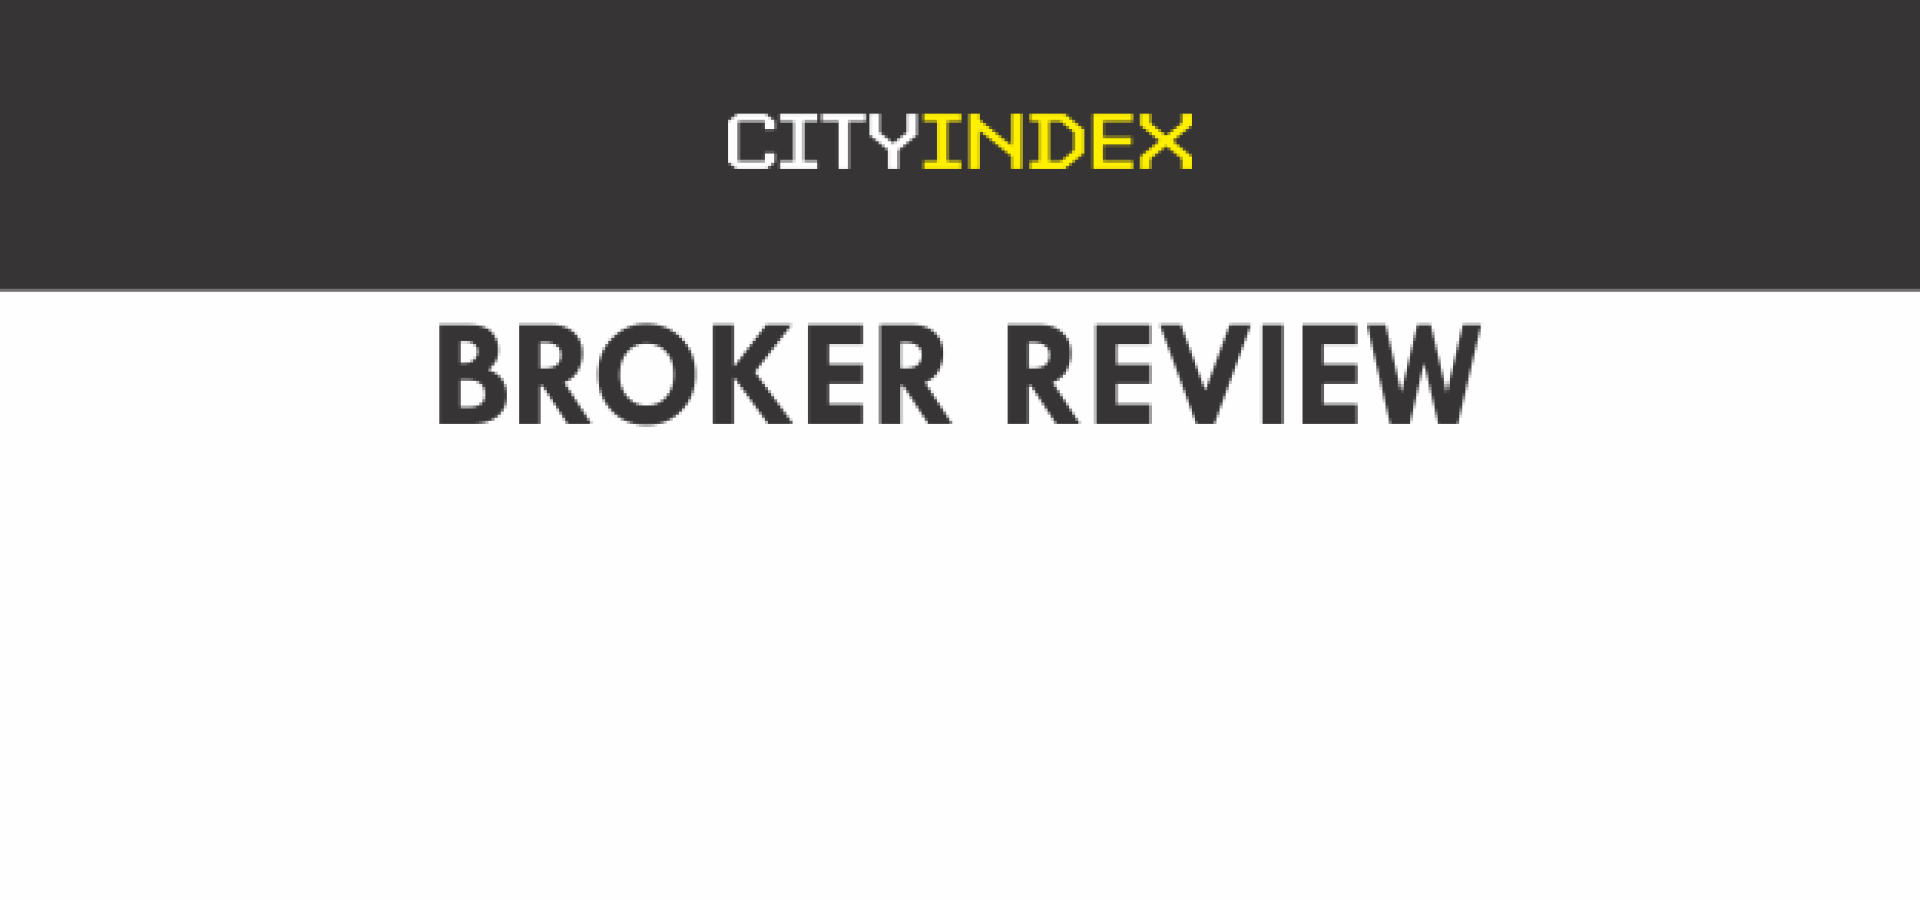 City Index Broker Review